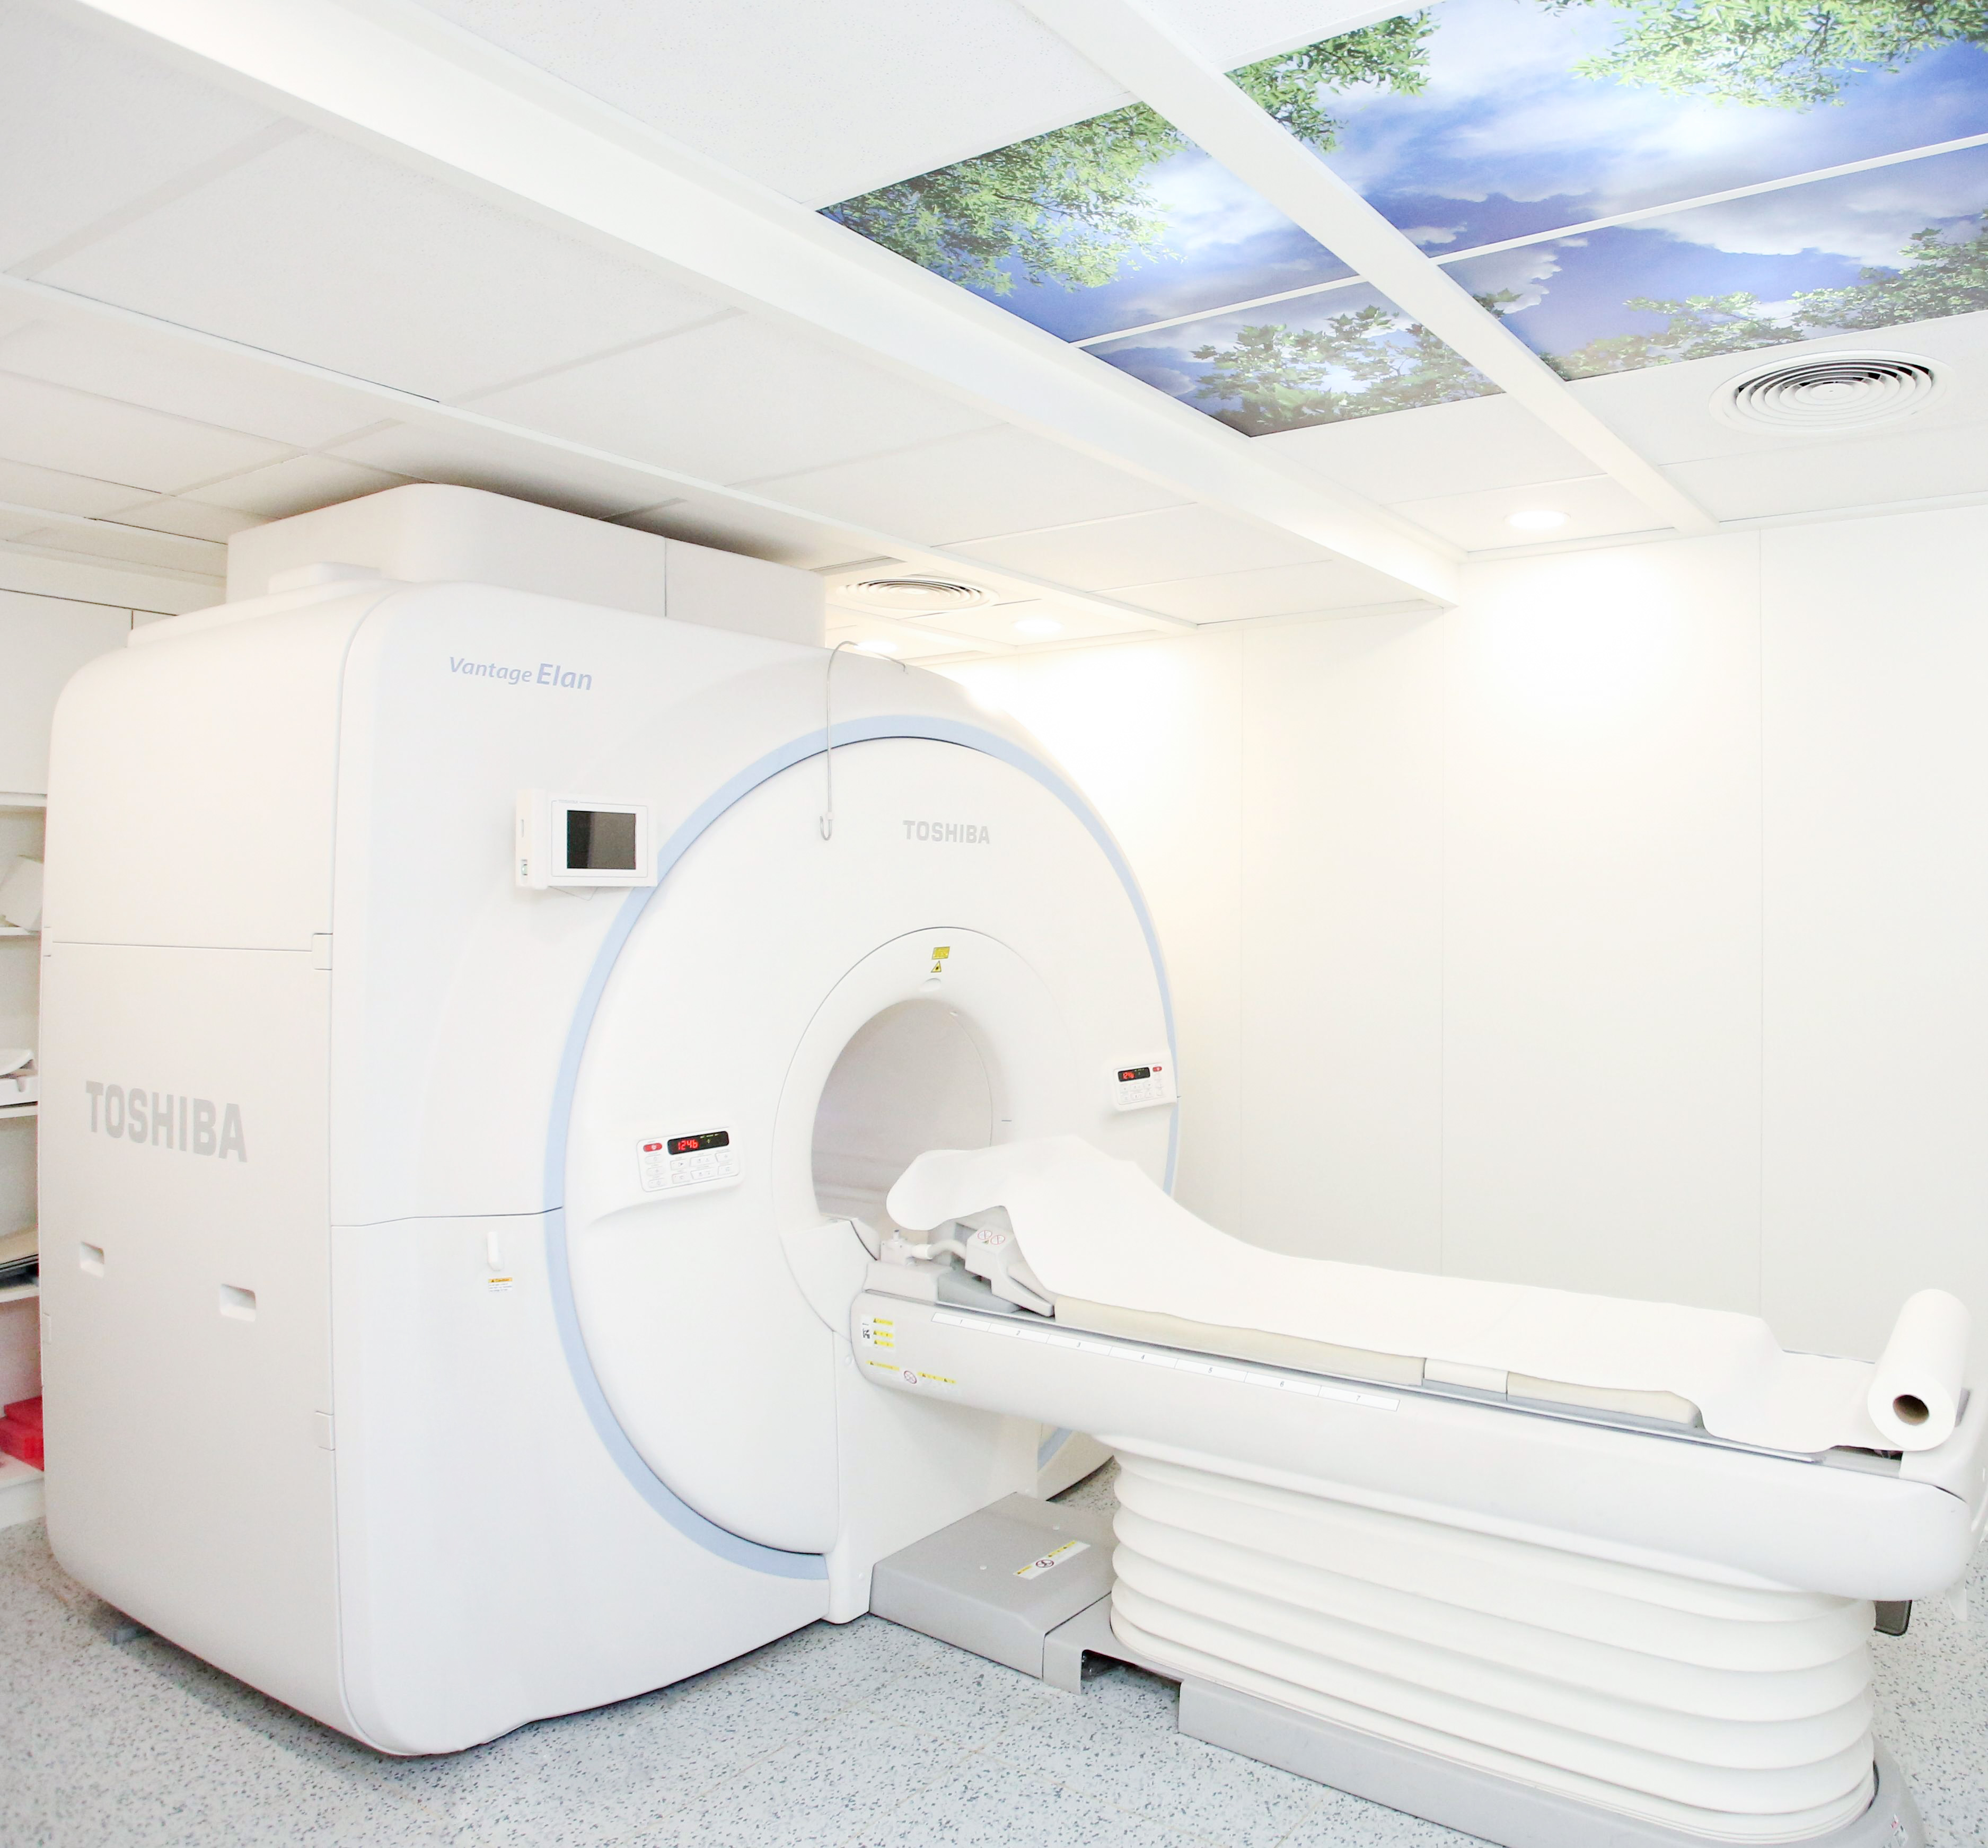 magnitur-rezonansuli tomograpia